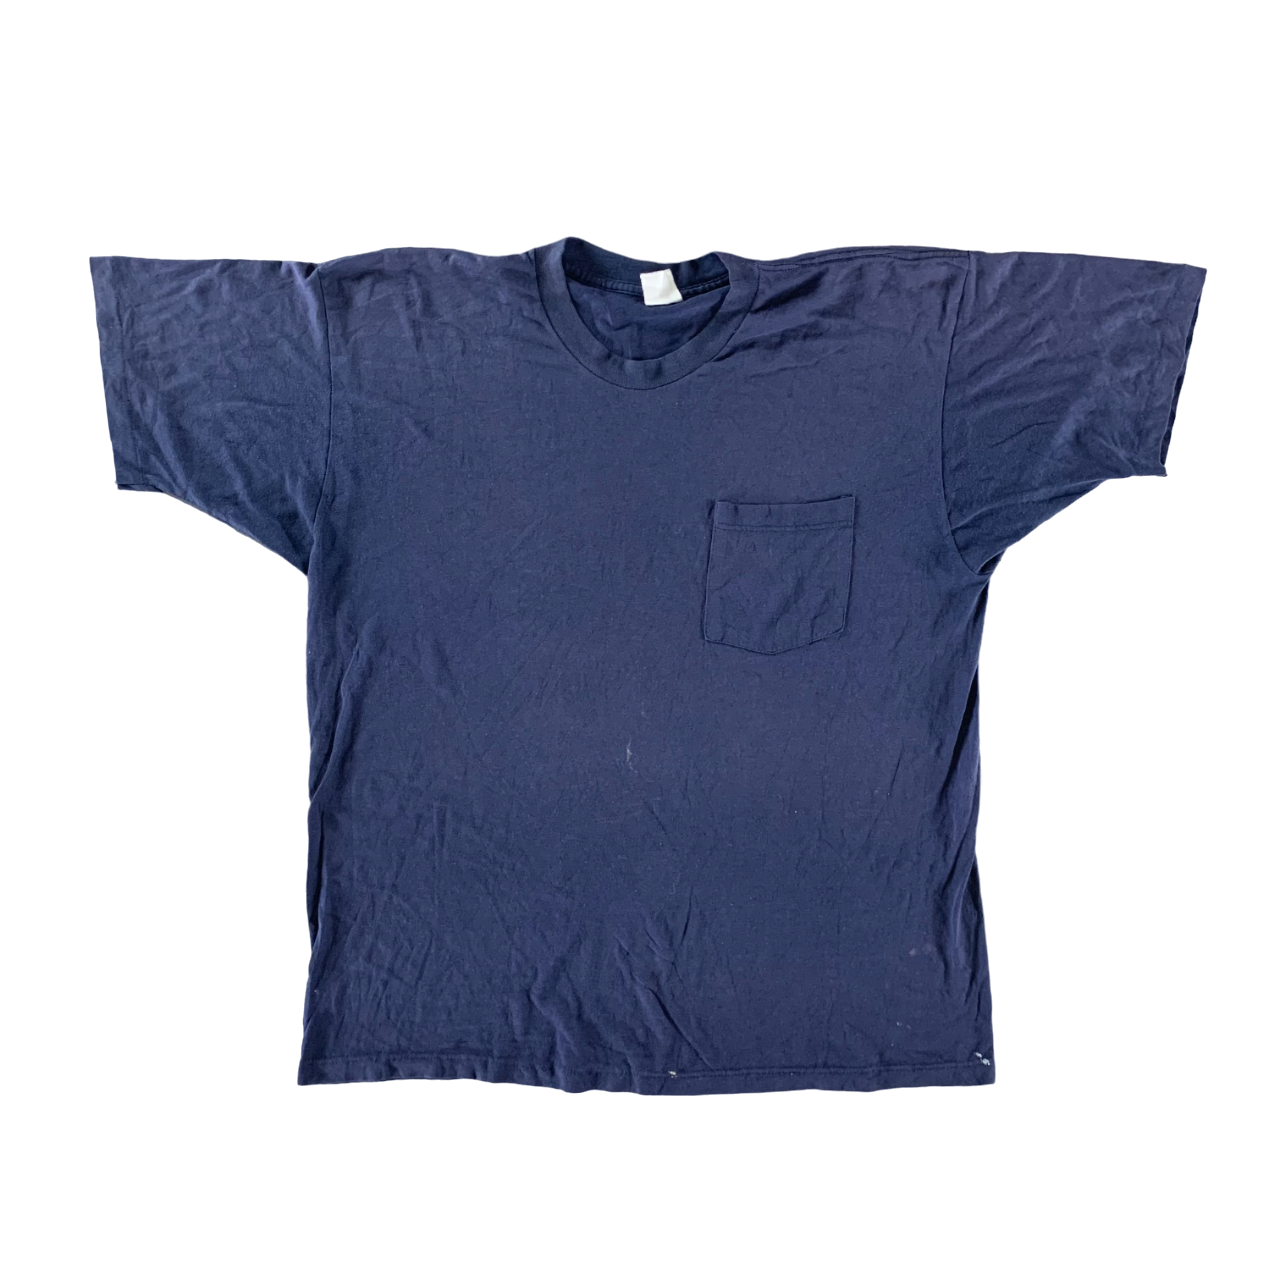 Vintage 1990s Pocket T-shirt size XL